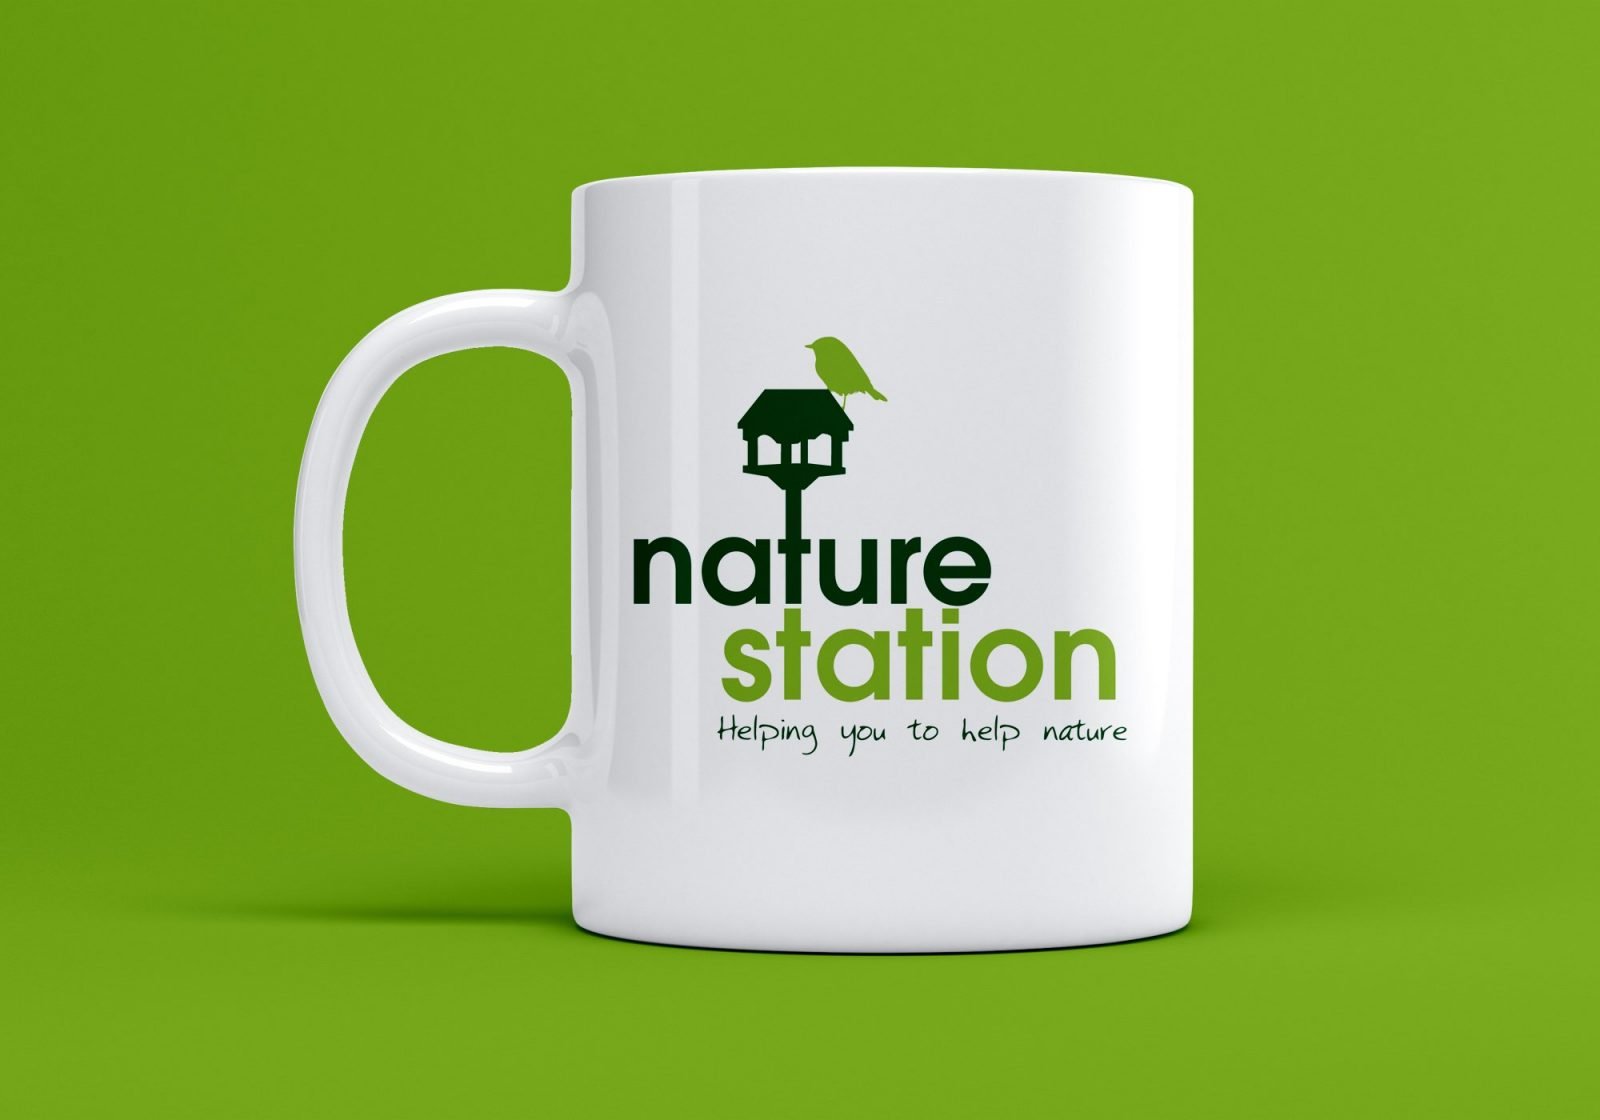 A branded mug showing the logo for Nature Station